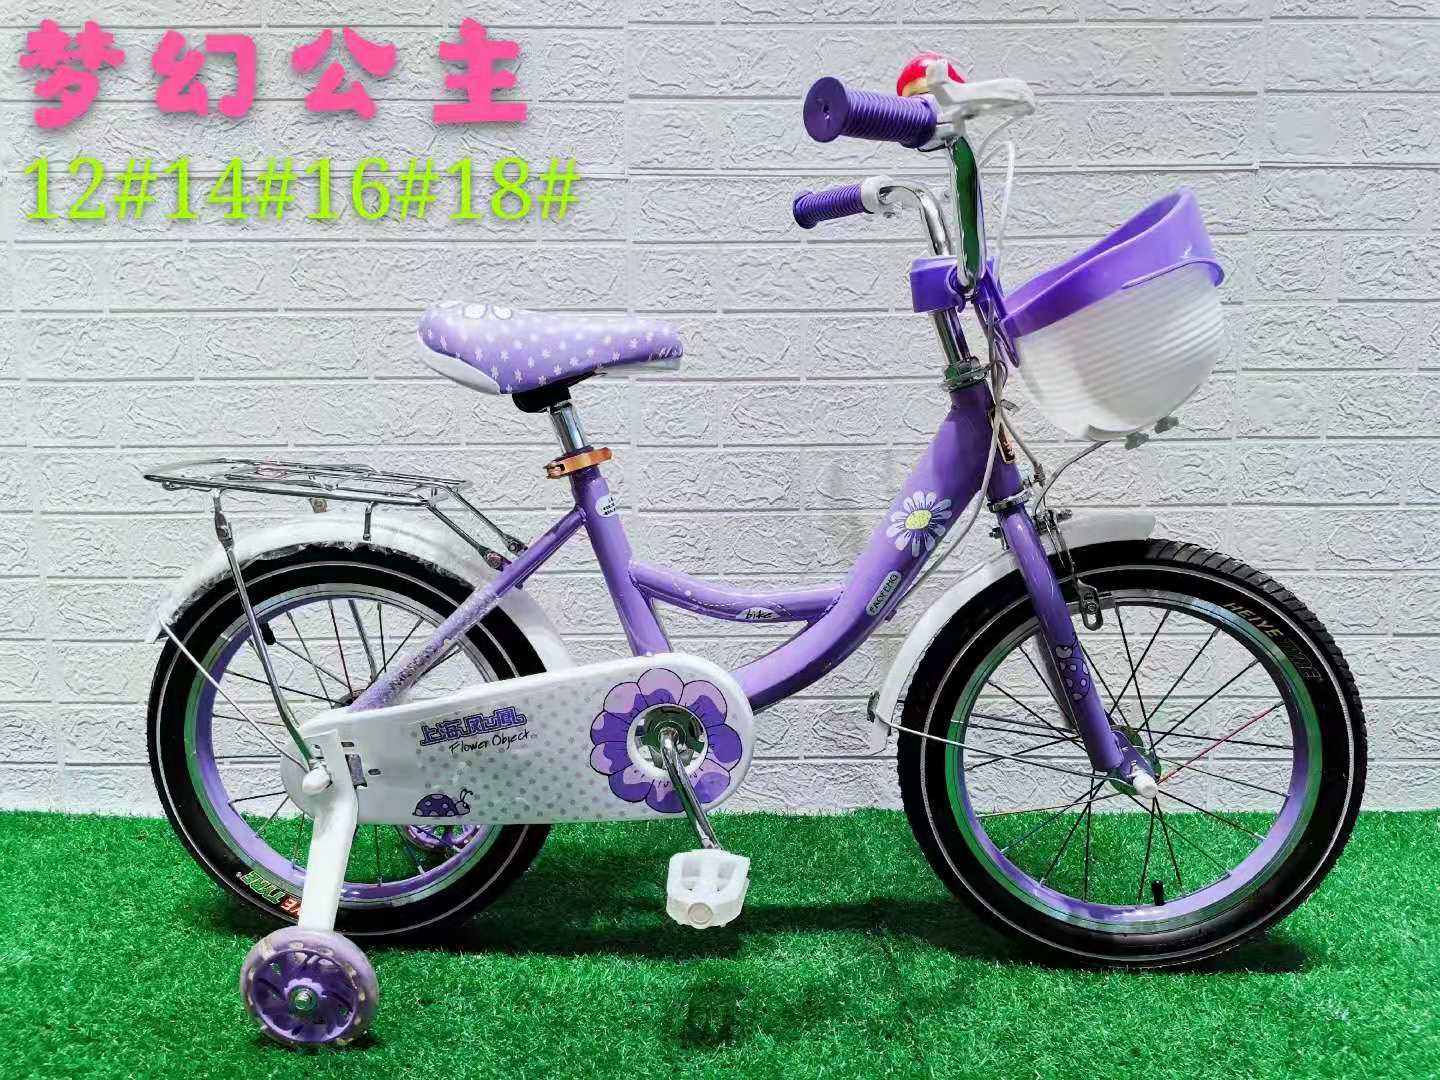 Wholesale children bicycle 12 16inch kids bike for 3 8 10 years girl / baby girl bike with training wheels